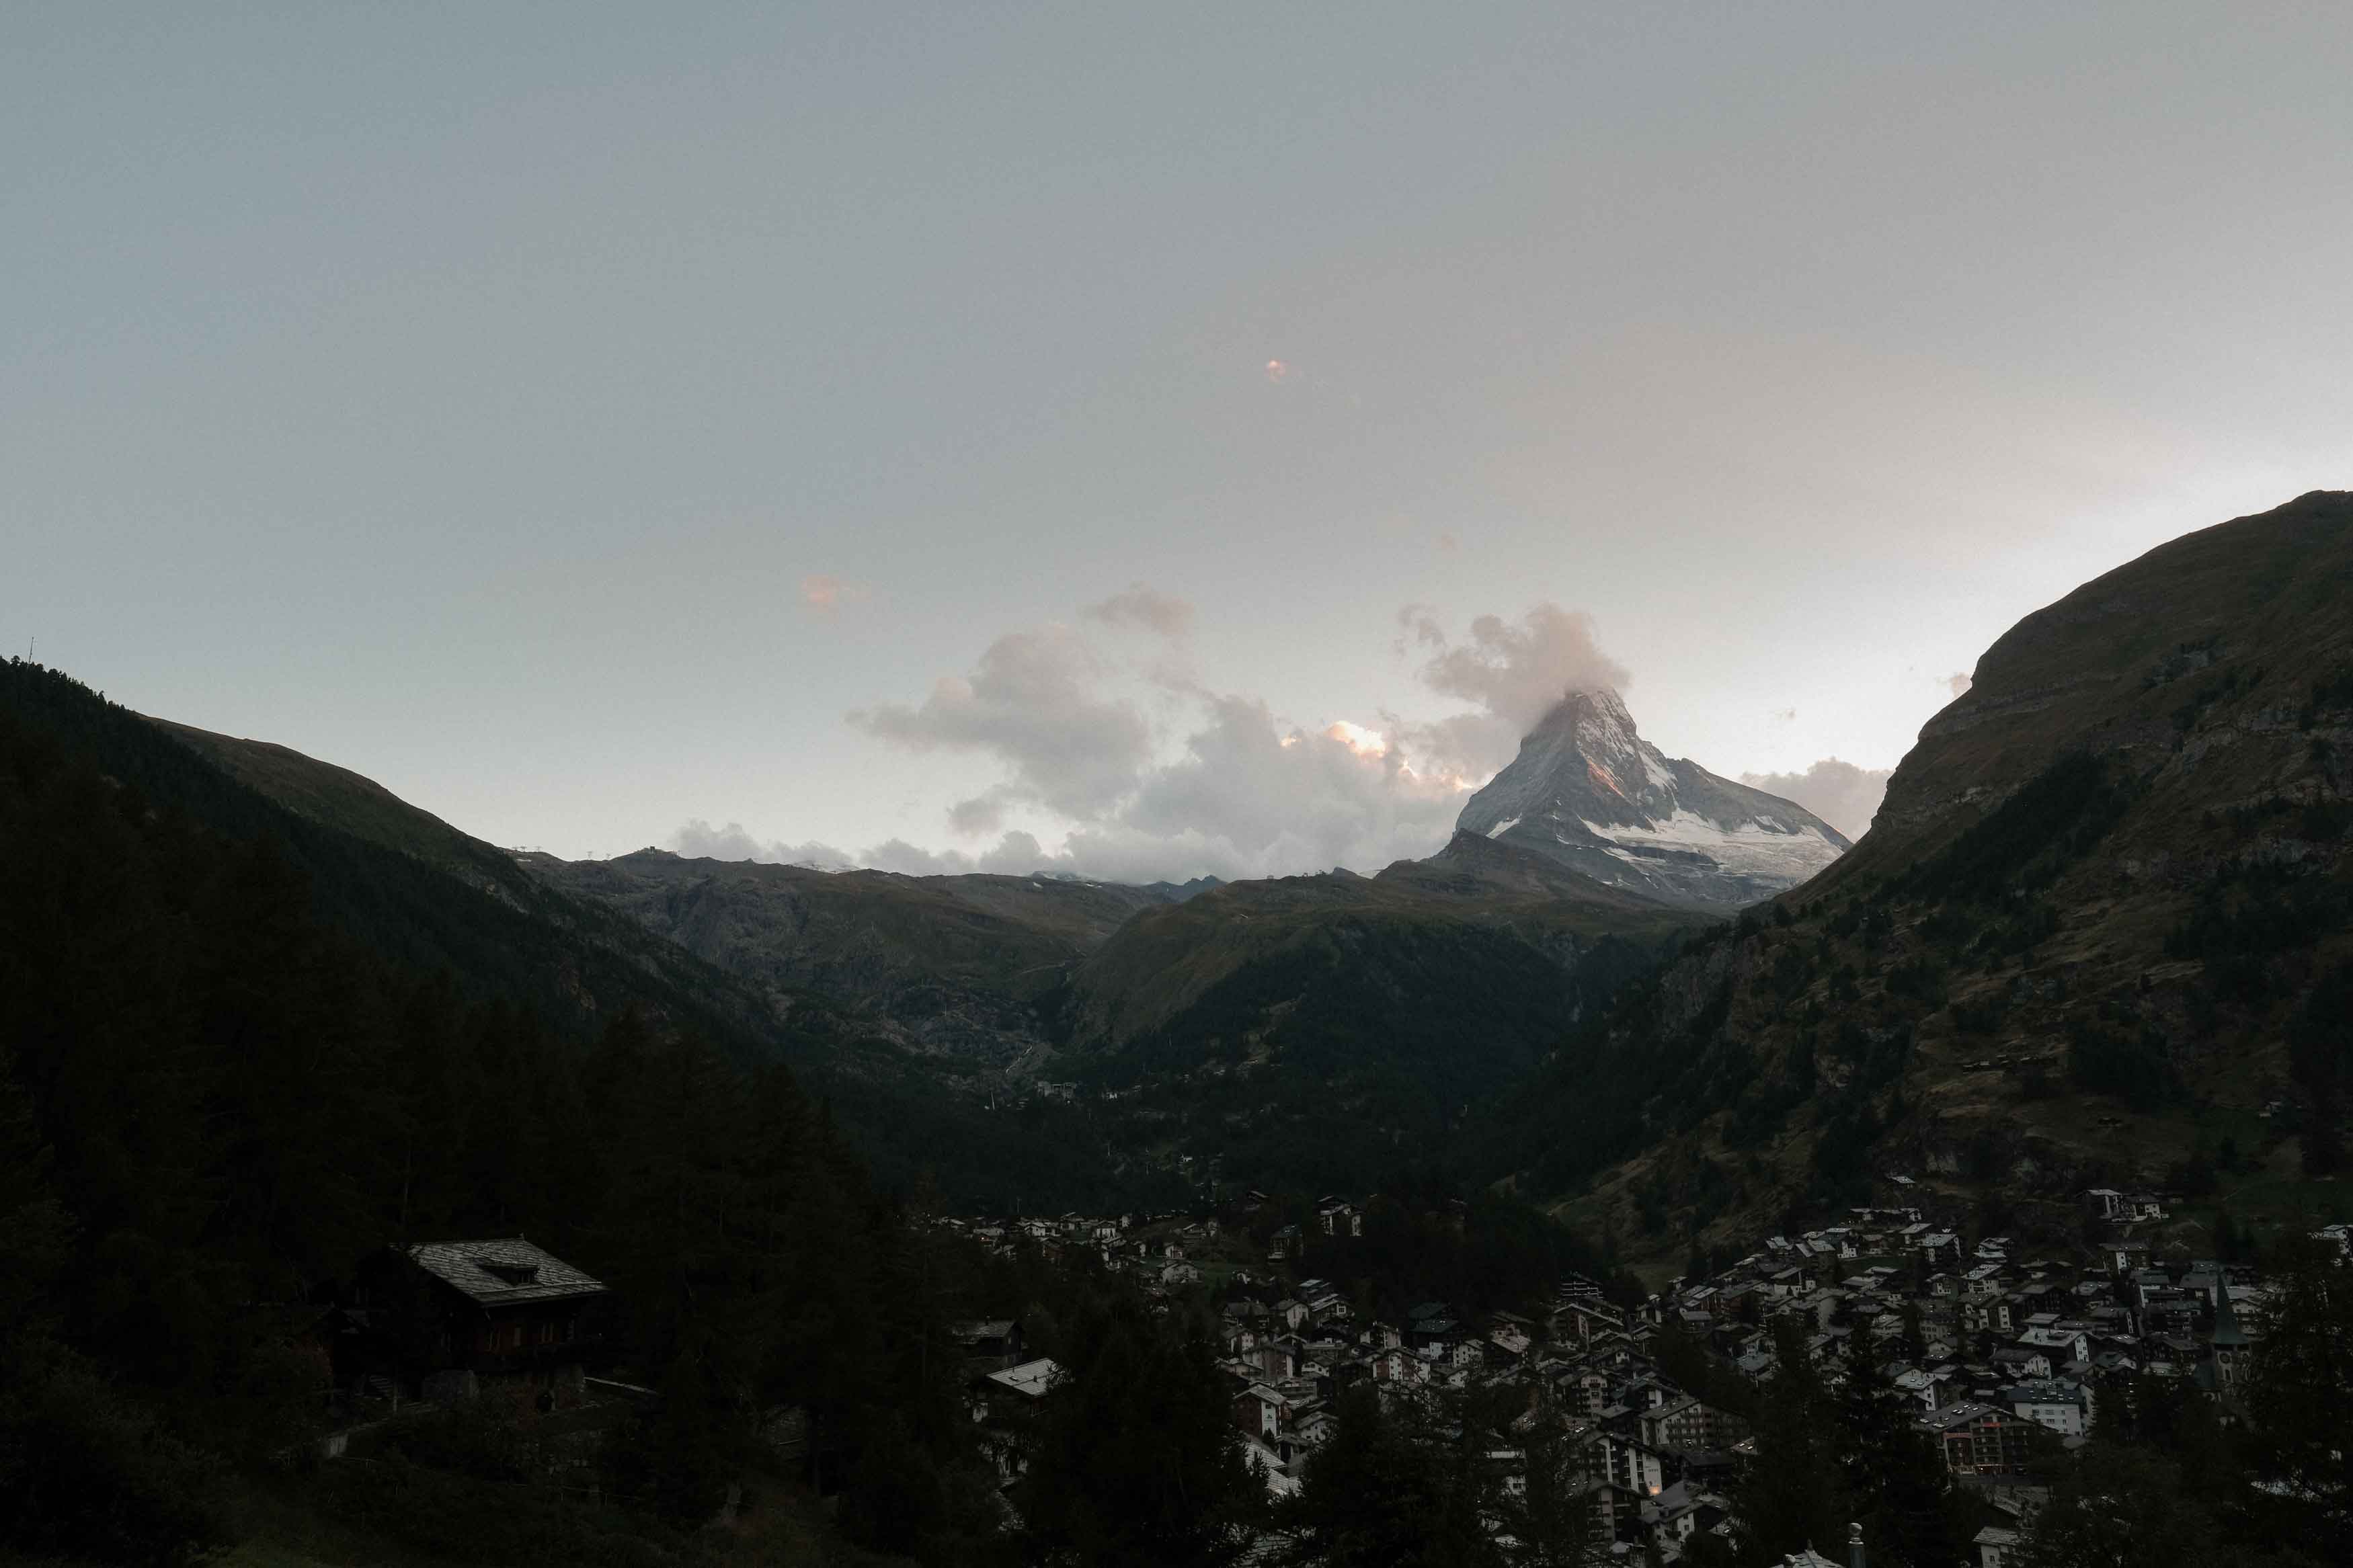 View over the village of Zermatt and to the Matterhorn